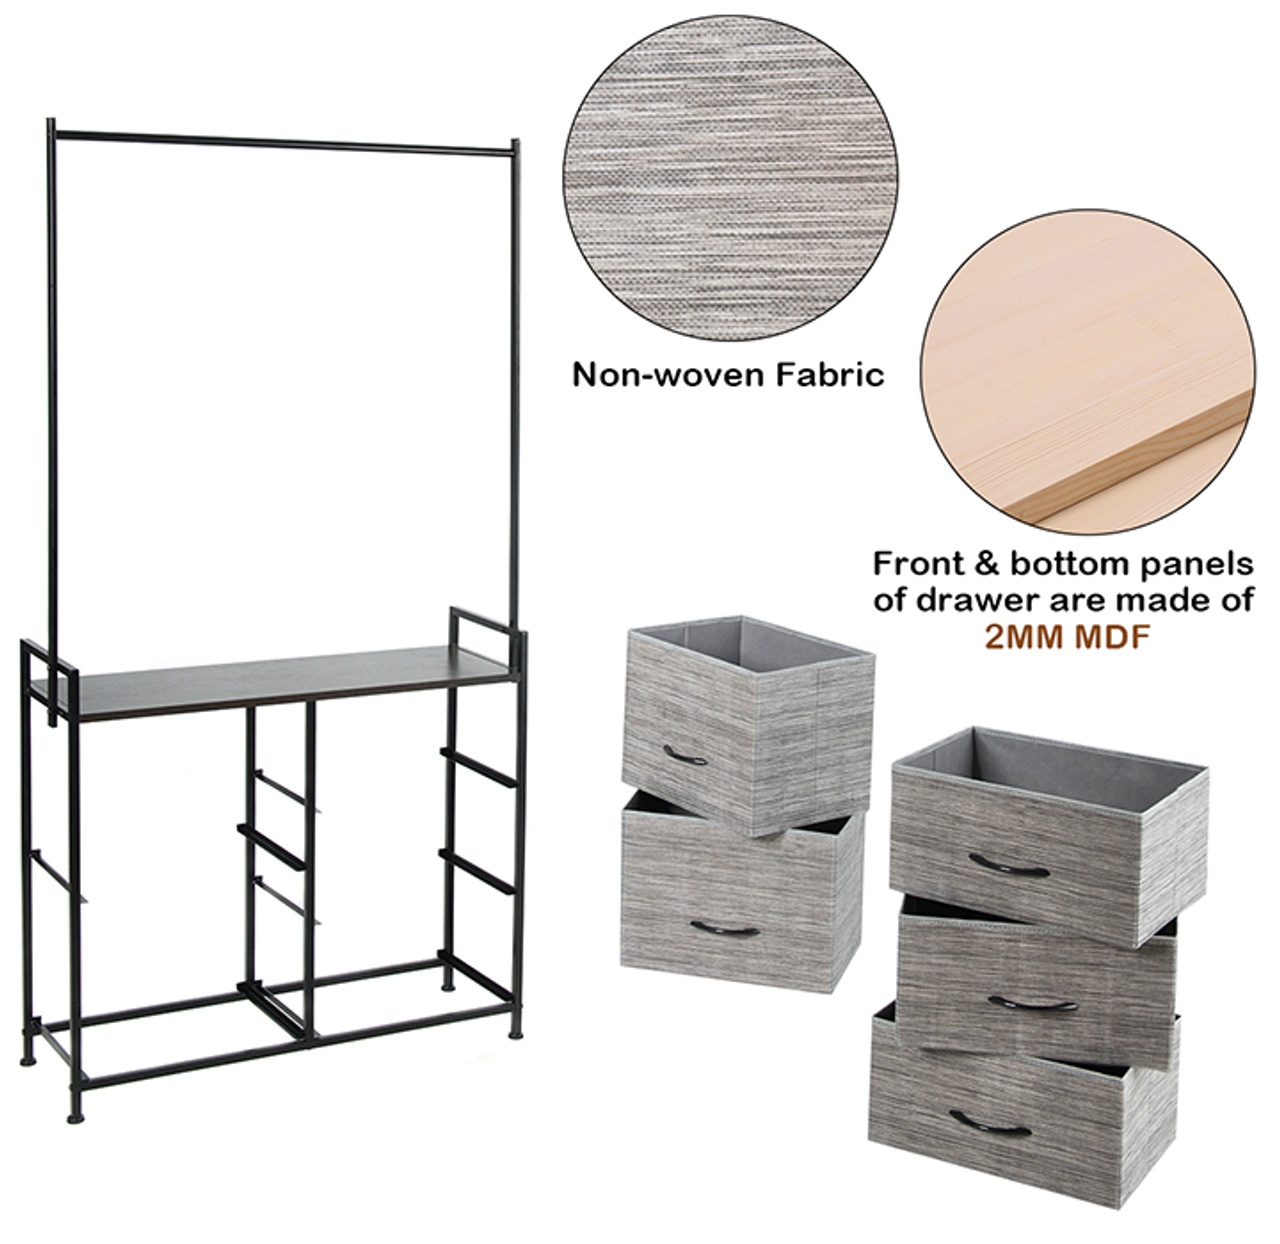 Wooden 5-Drawer Closet Storage Organizer product image